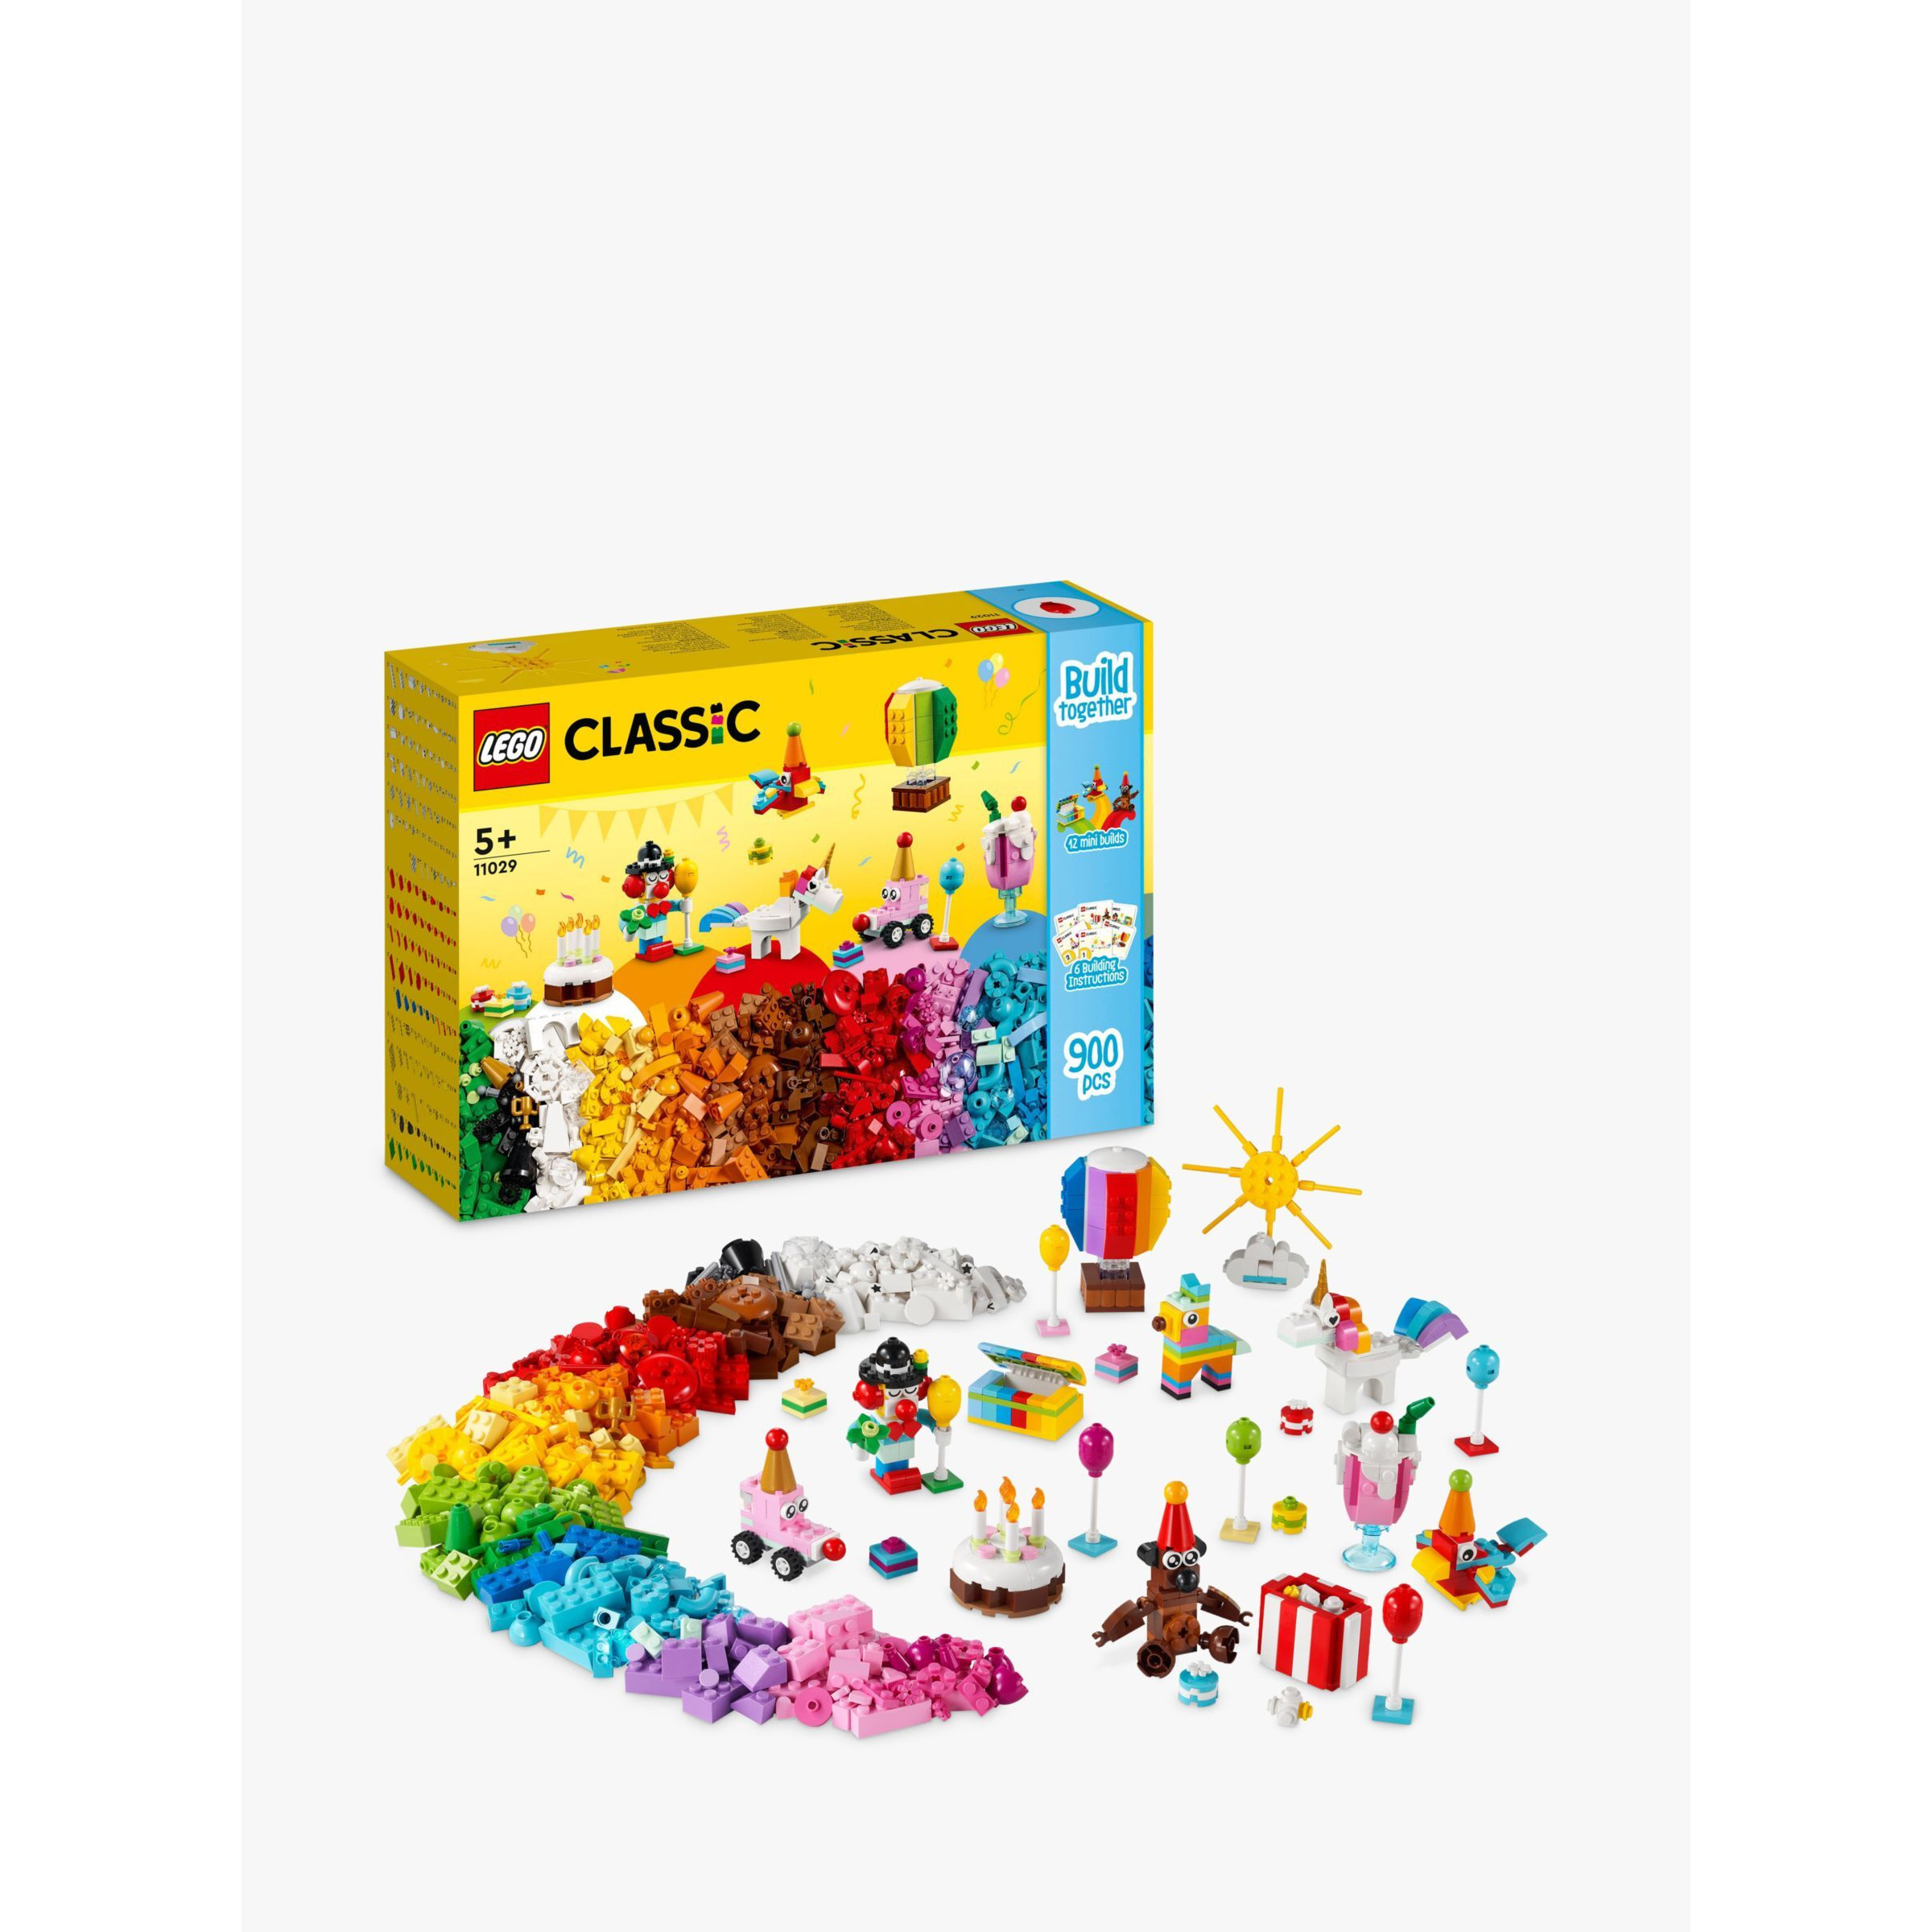 LEGO Classic 11029 Creative Party Box - image 1